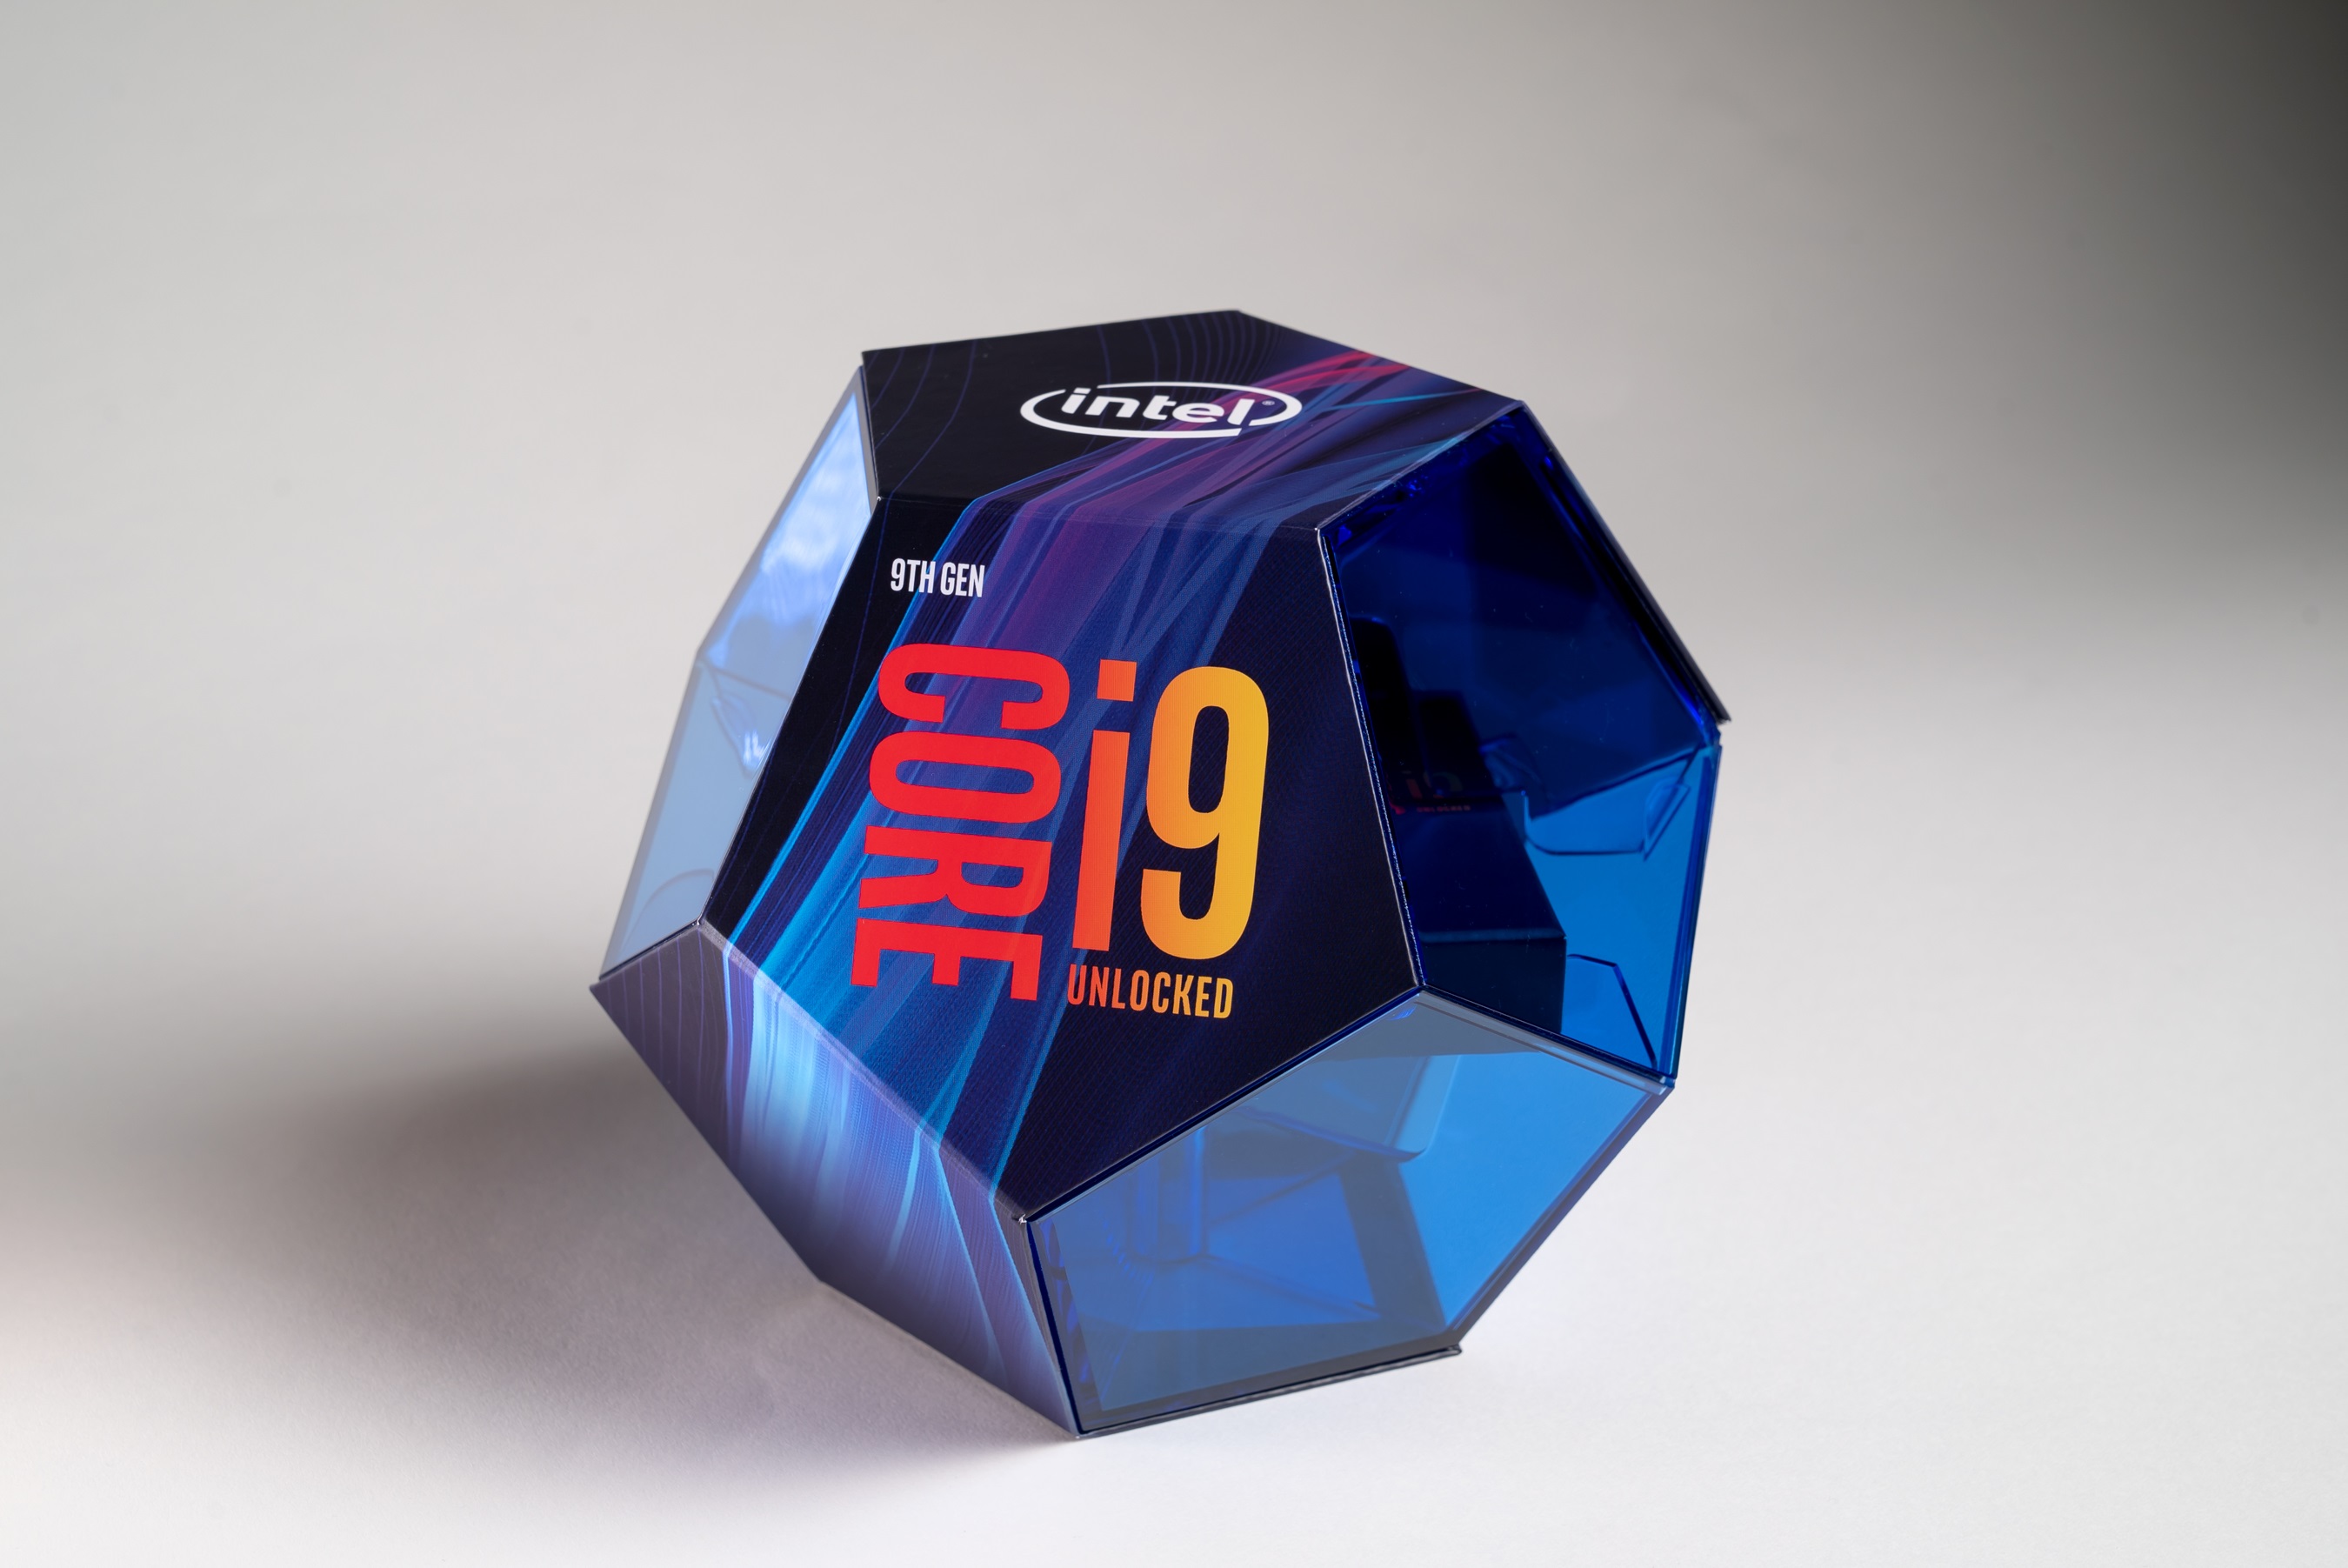 Intel Core i9 Box